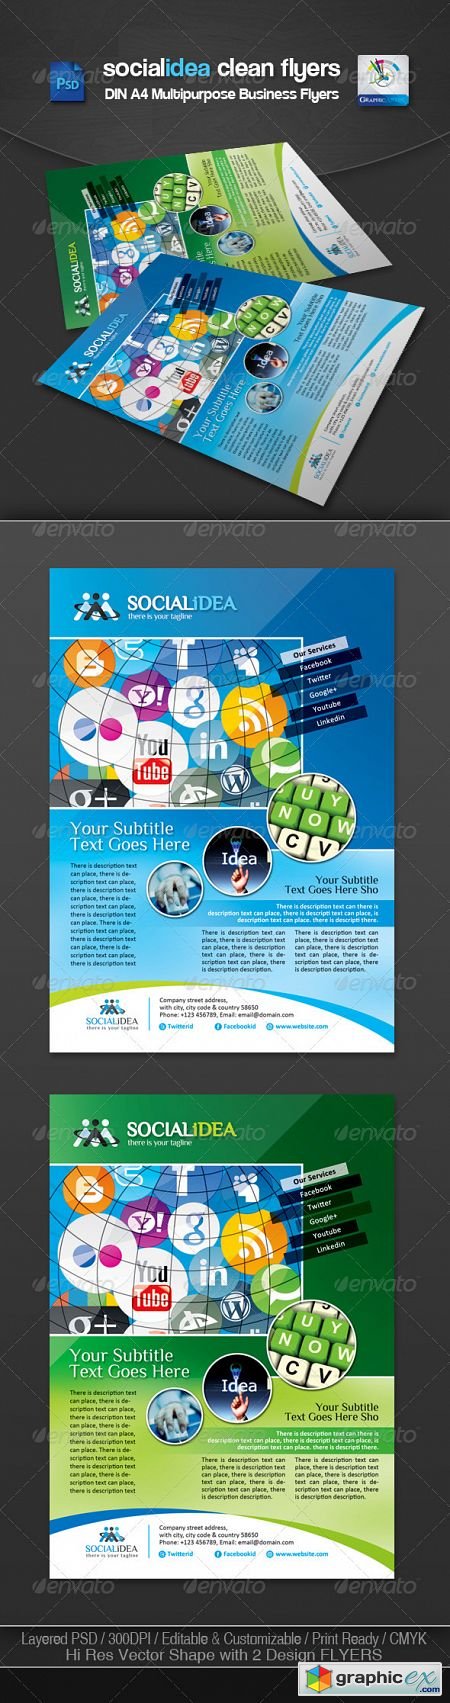 Socialidea Corporate Social Media Flyer/Ads 3551805